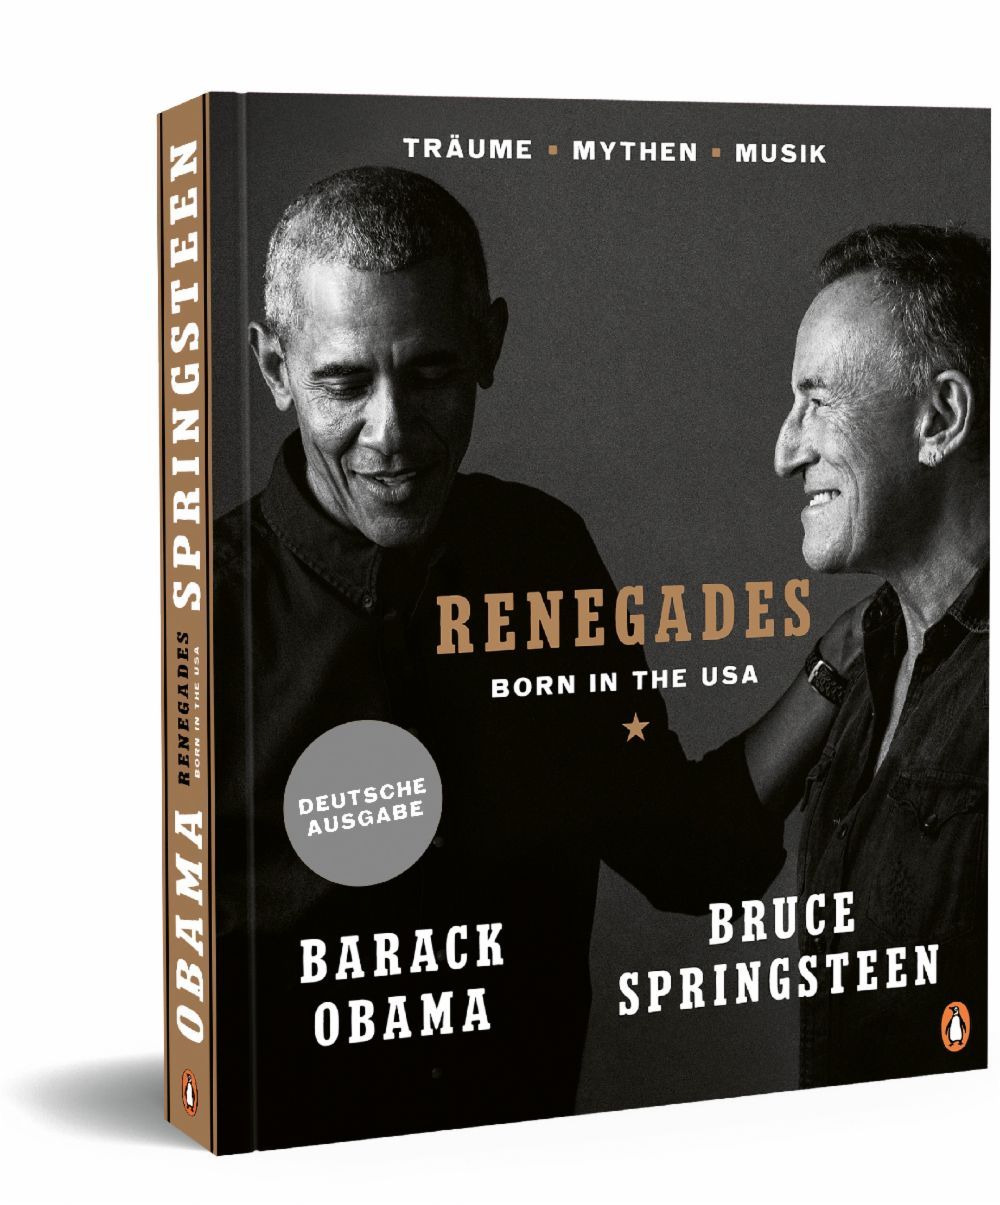 Barack Obama und Bruce Springsteen auf dem Cover